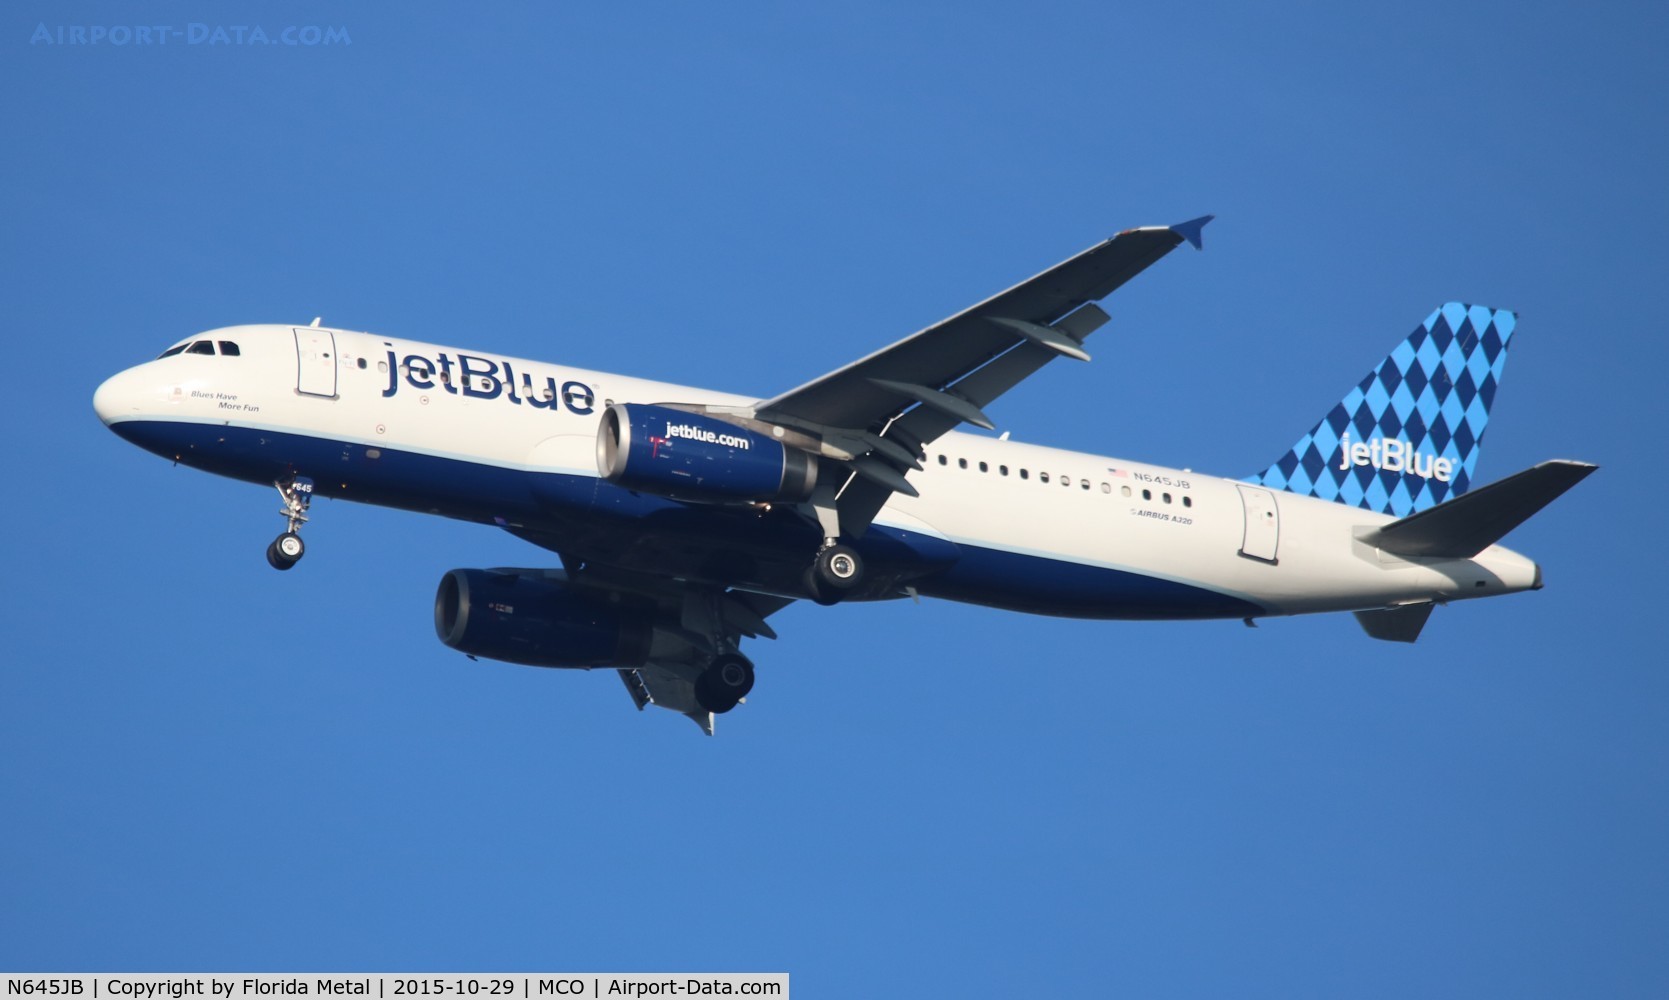 N645JB, 2006 Airbus A320-232 C/N 2900, Jet Blue